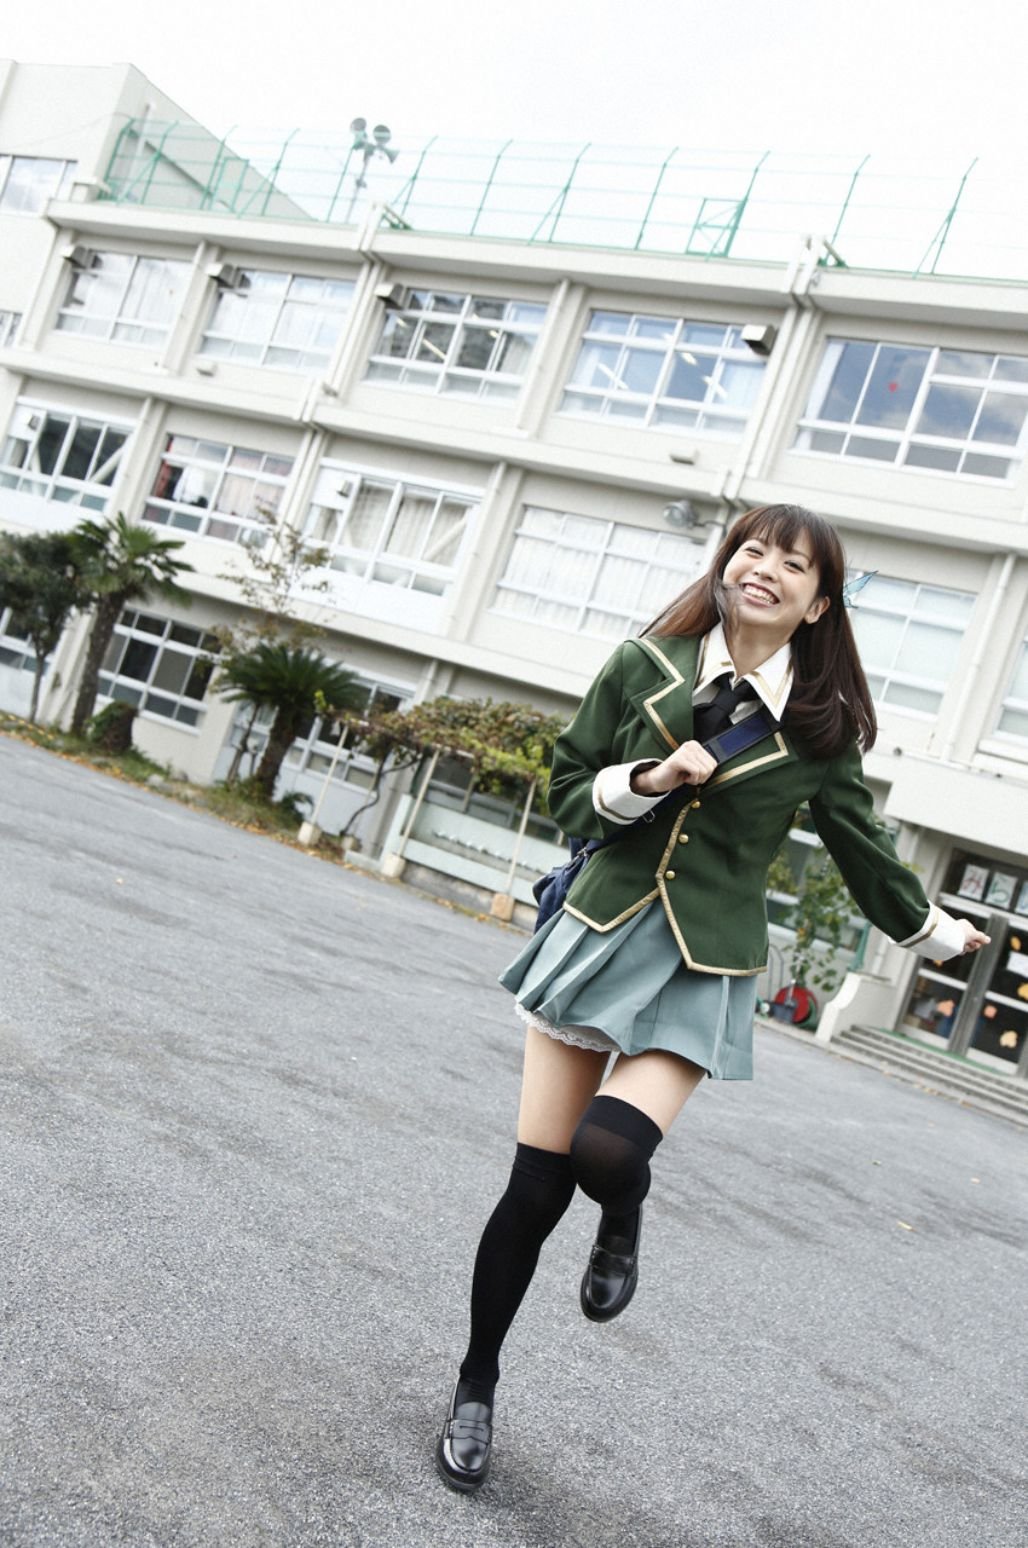 Image-Japanese-Gravure-Idol-Mio-Otani-Photos-Purity-Miss-Magazine-TruePic.net- Picture-23